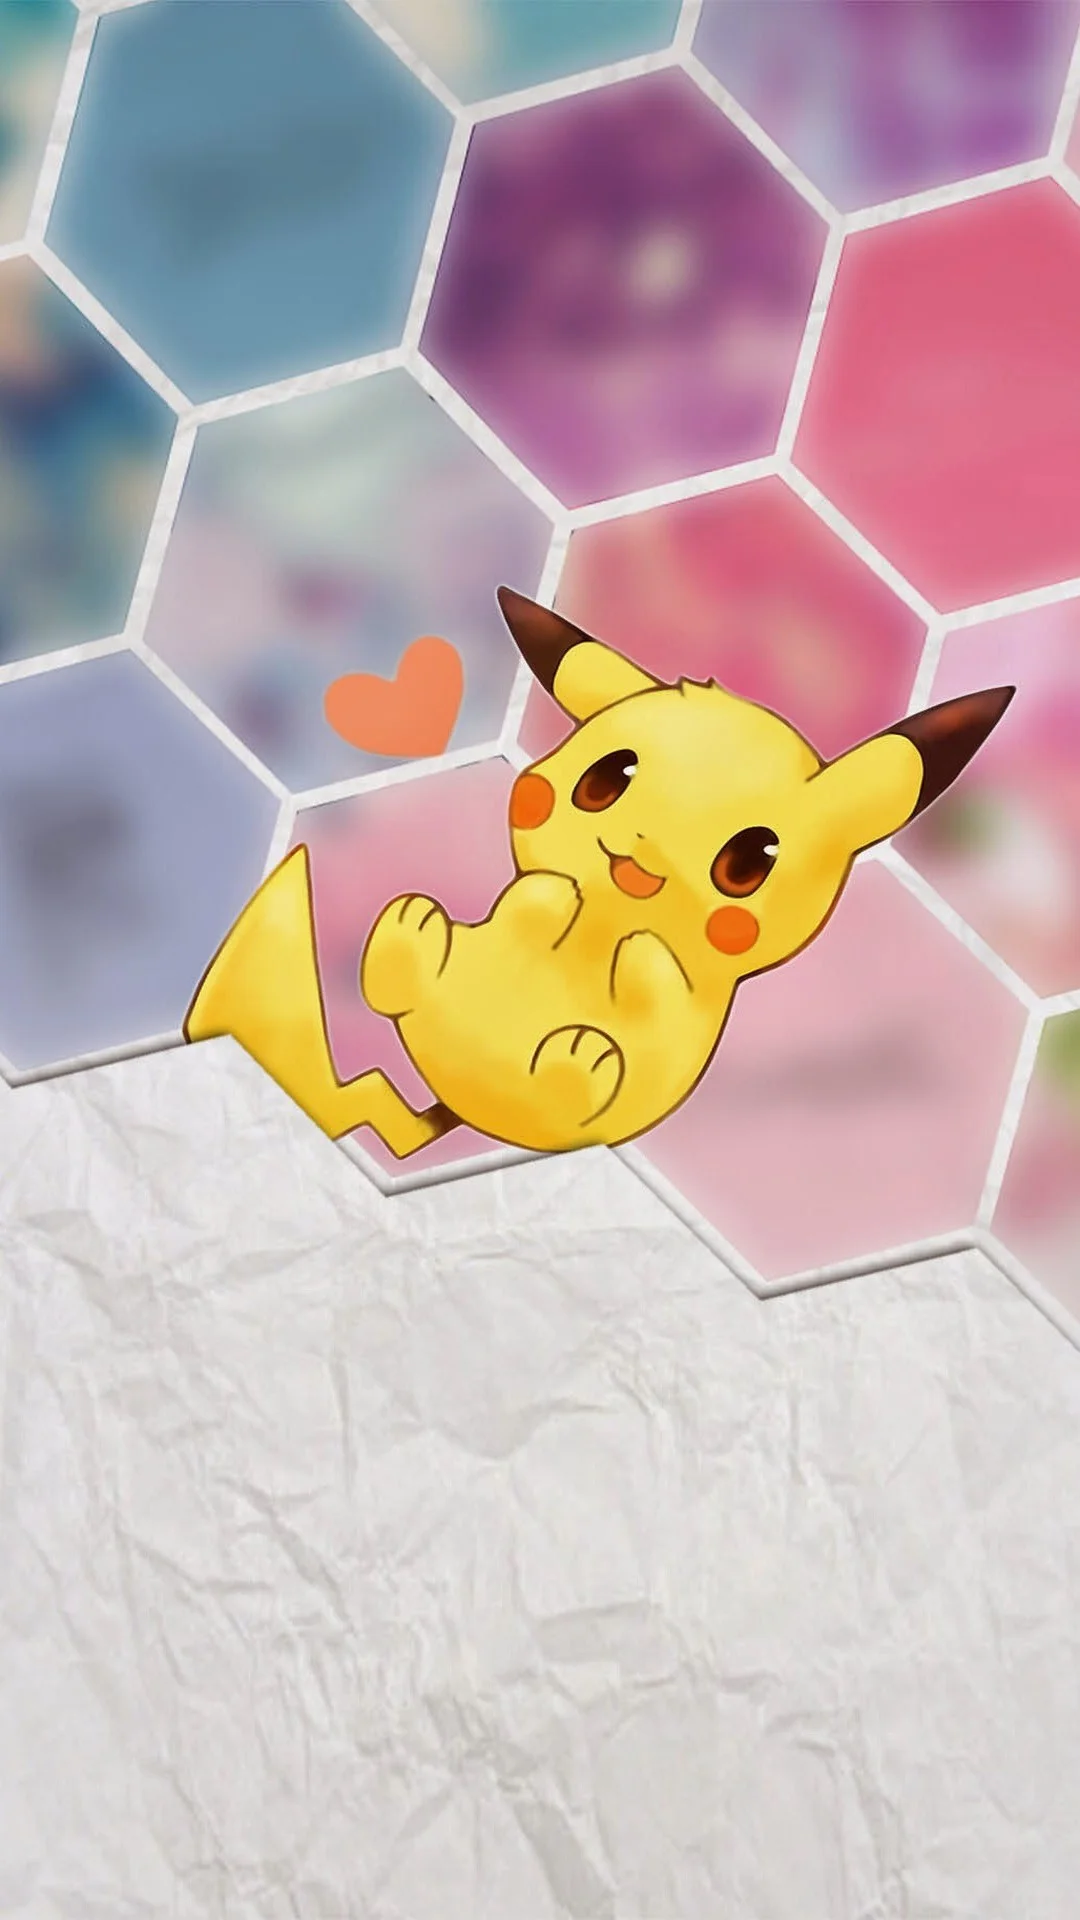 Animal crossing Tap image for more iPhone 6 Plus Pikachu wallpapers Pikachu – mobile9 Cute